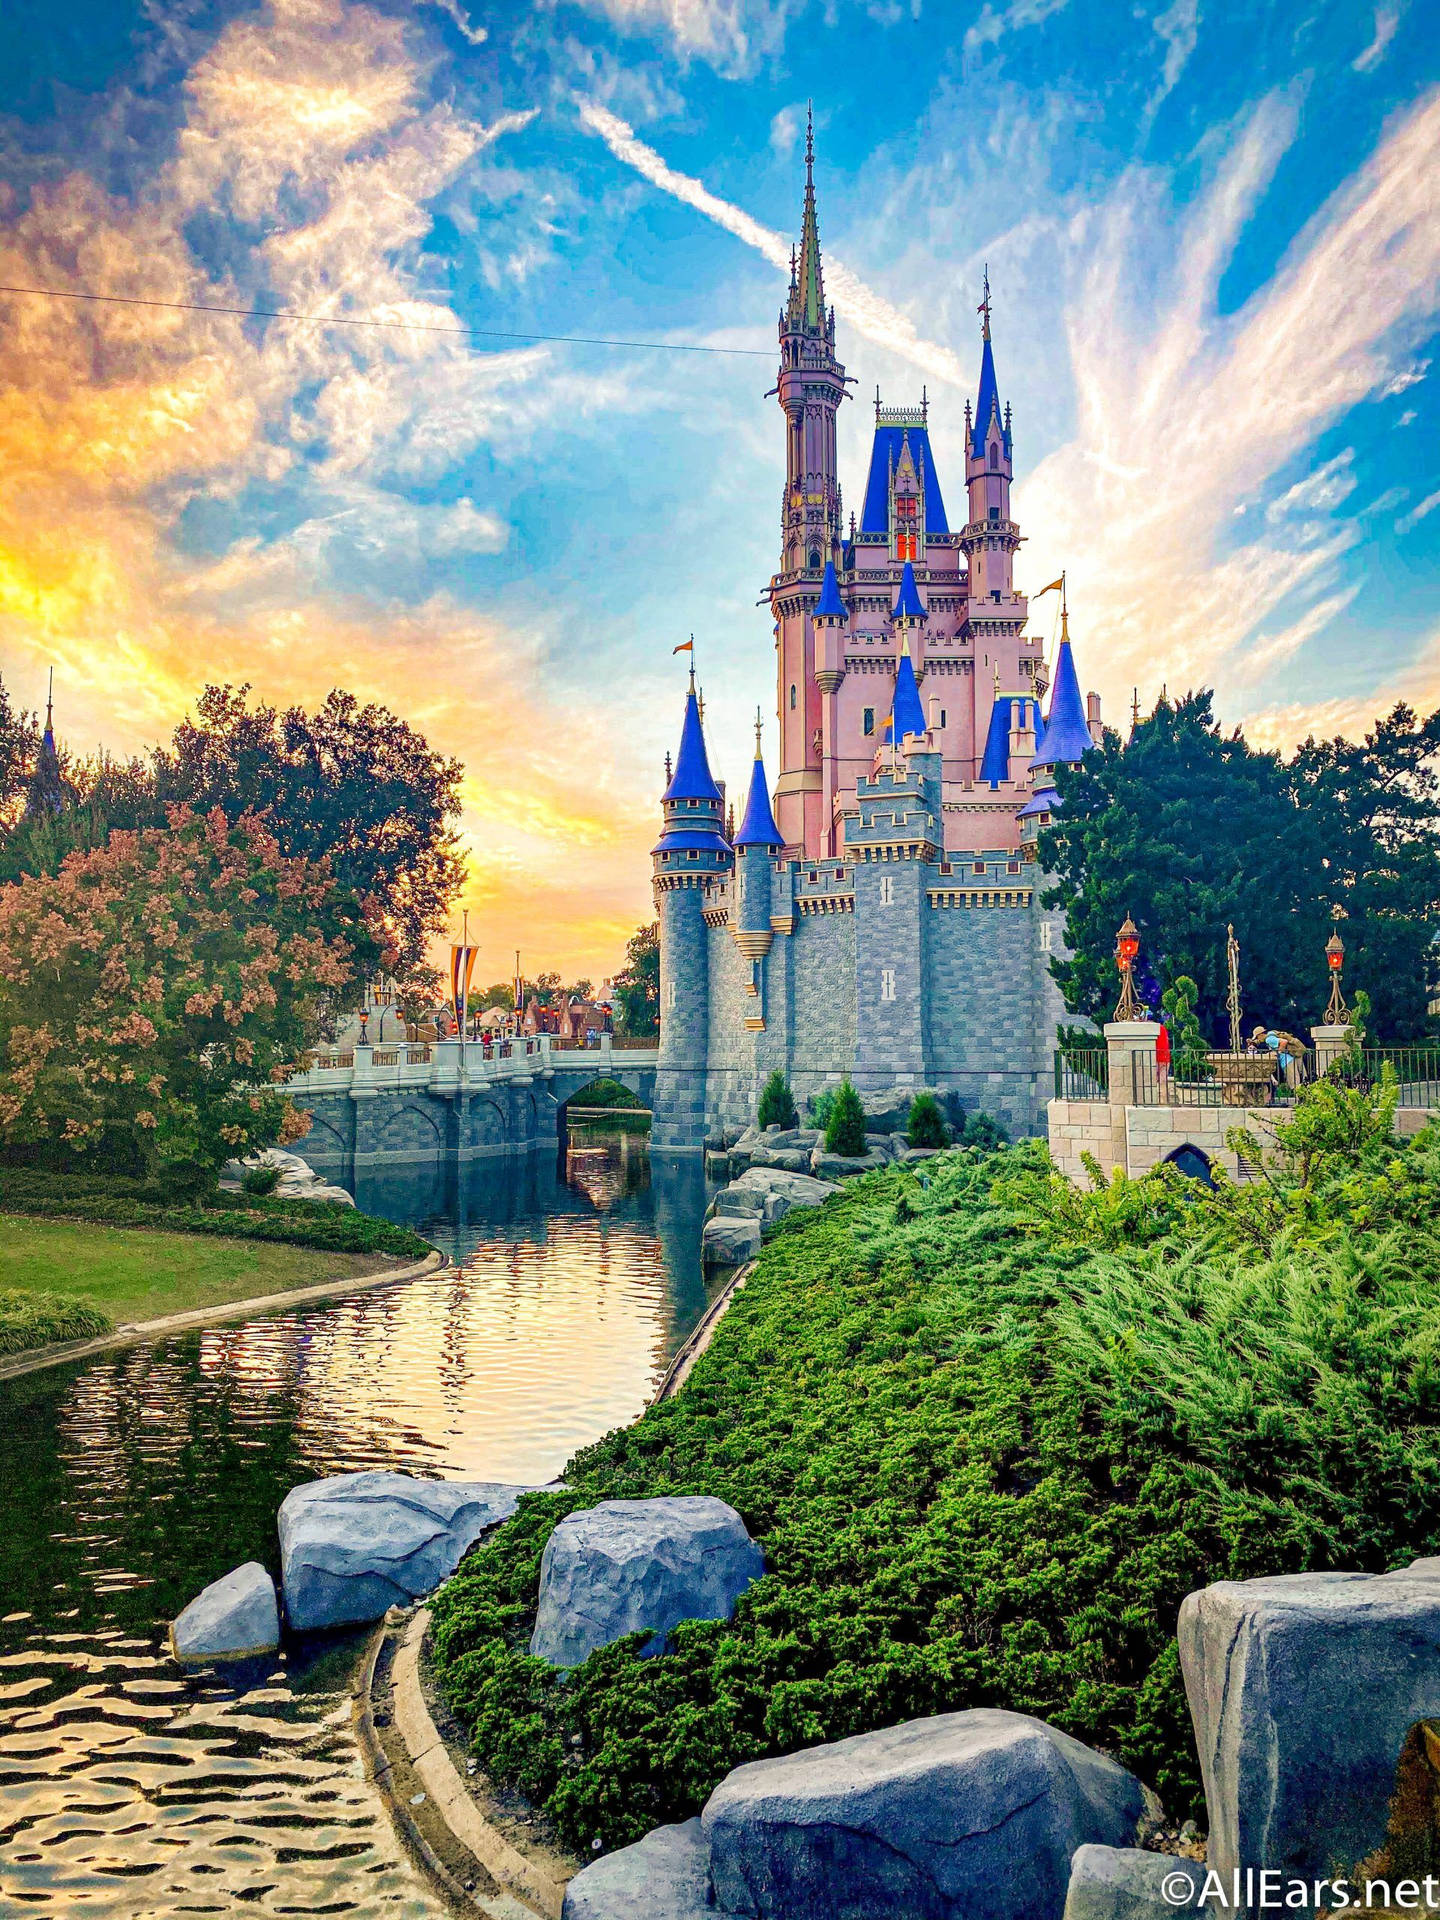 Enchanting Day Disney Castle Picture